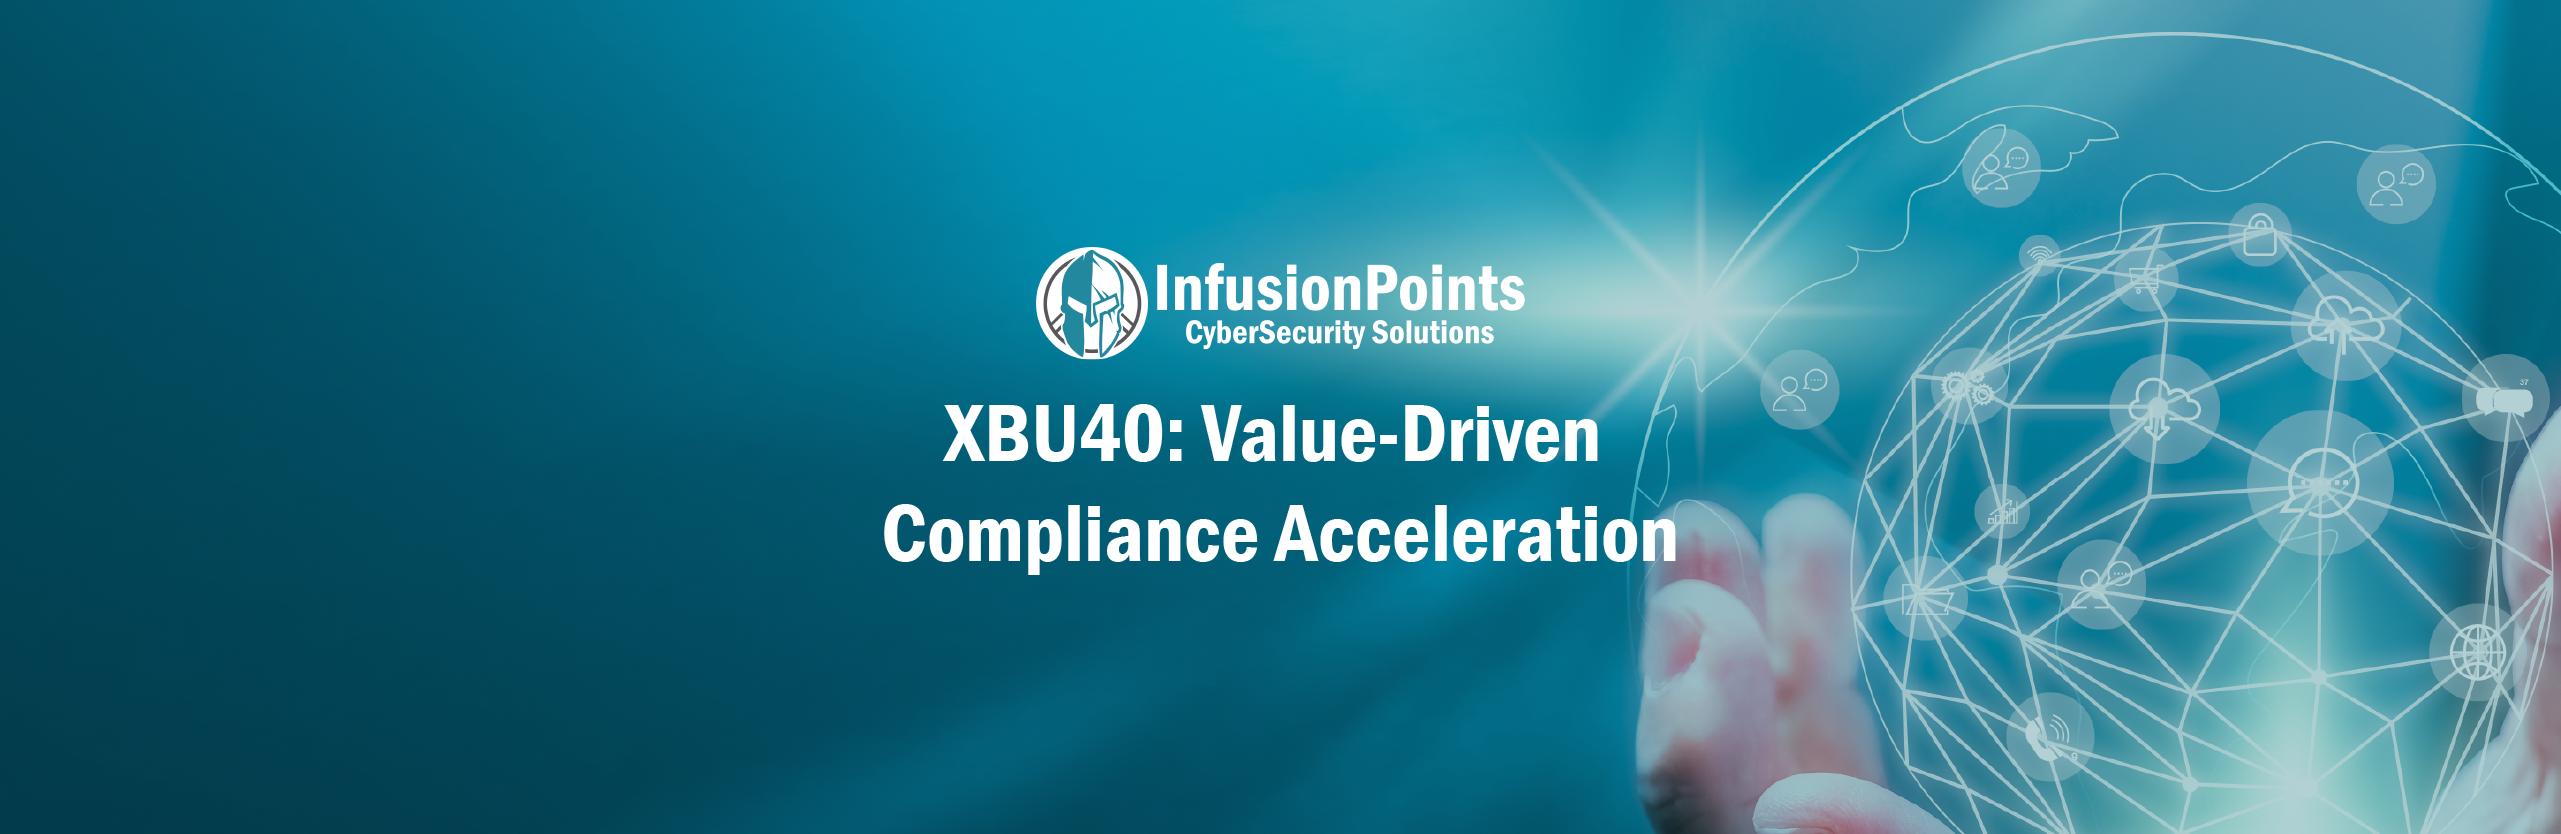 XBU40: Value-Driven Compliance Acceleration